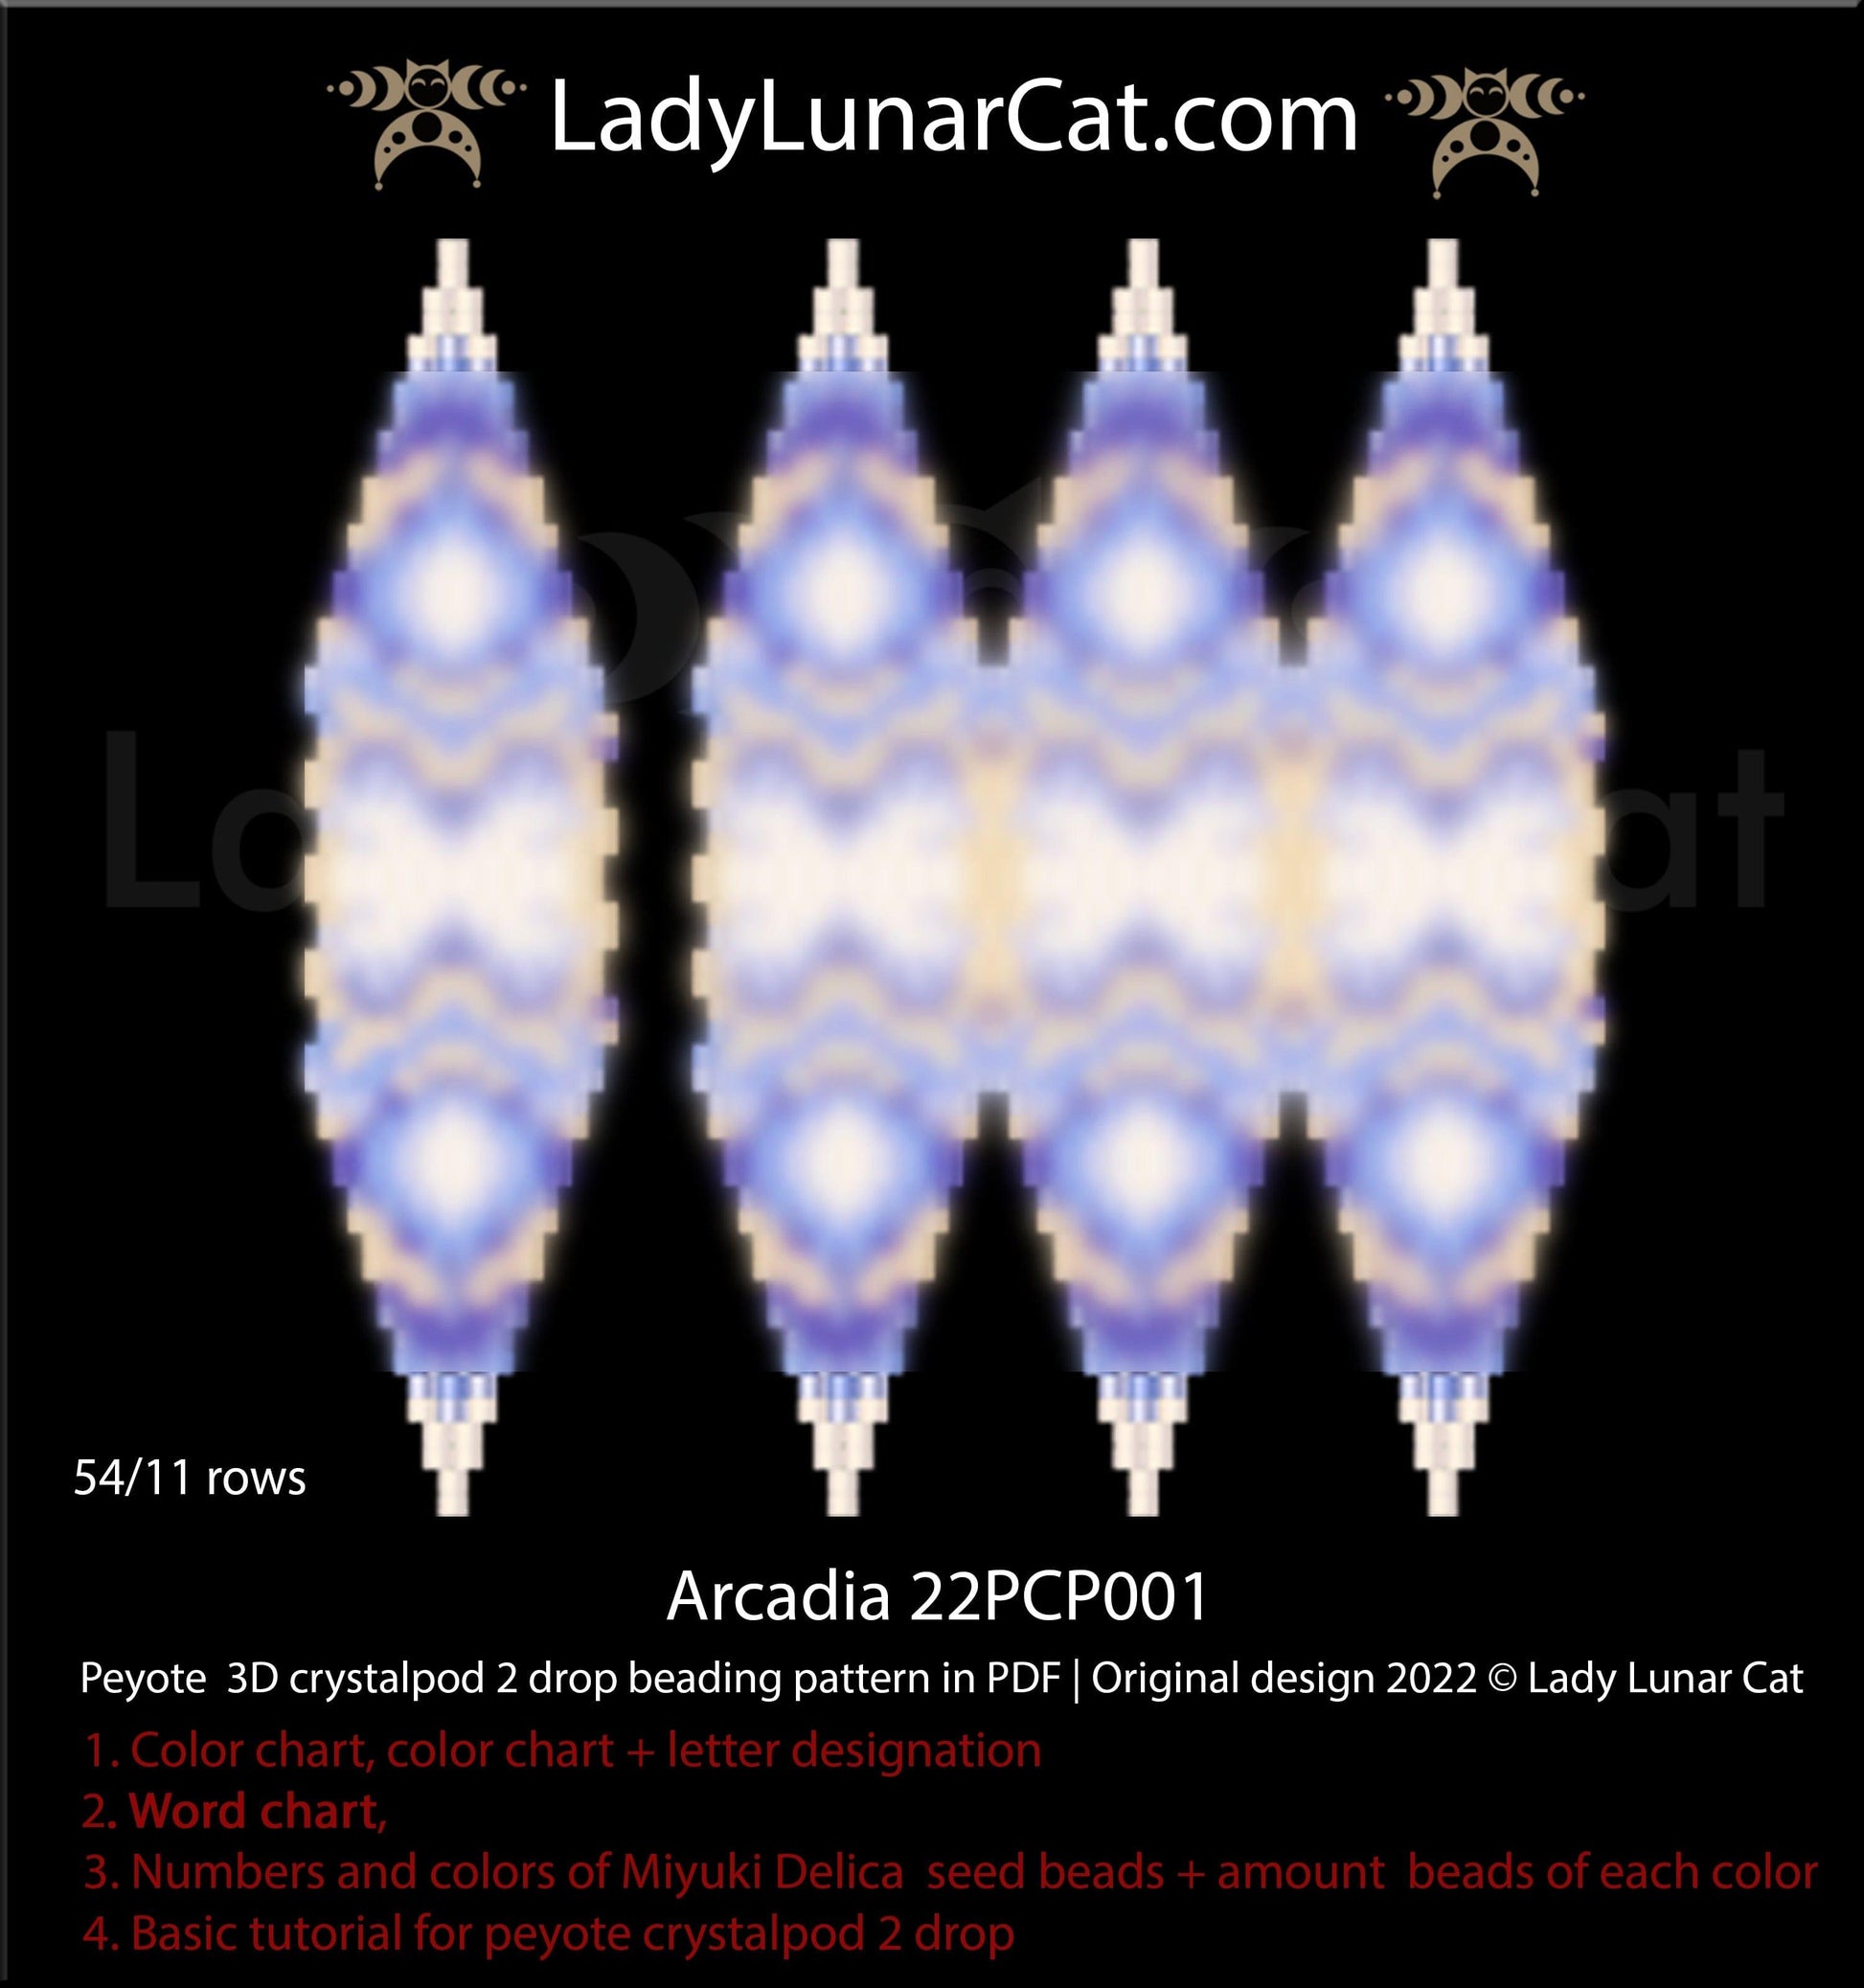 Peyote 2drop pod pattern or crystalpod pattern for beading  Arcadia 22PCP001 LadyLunarCat